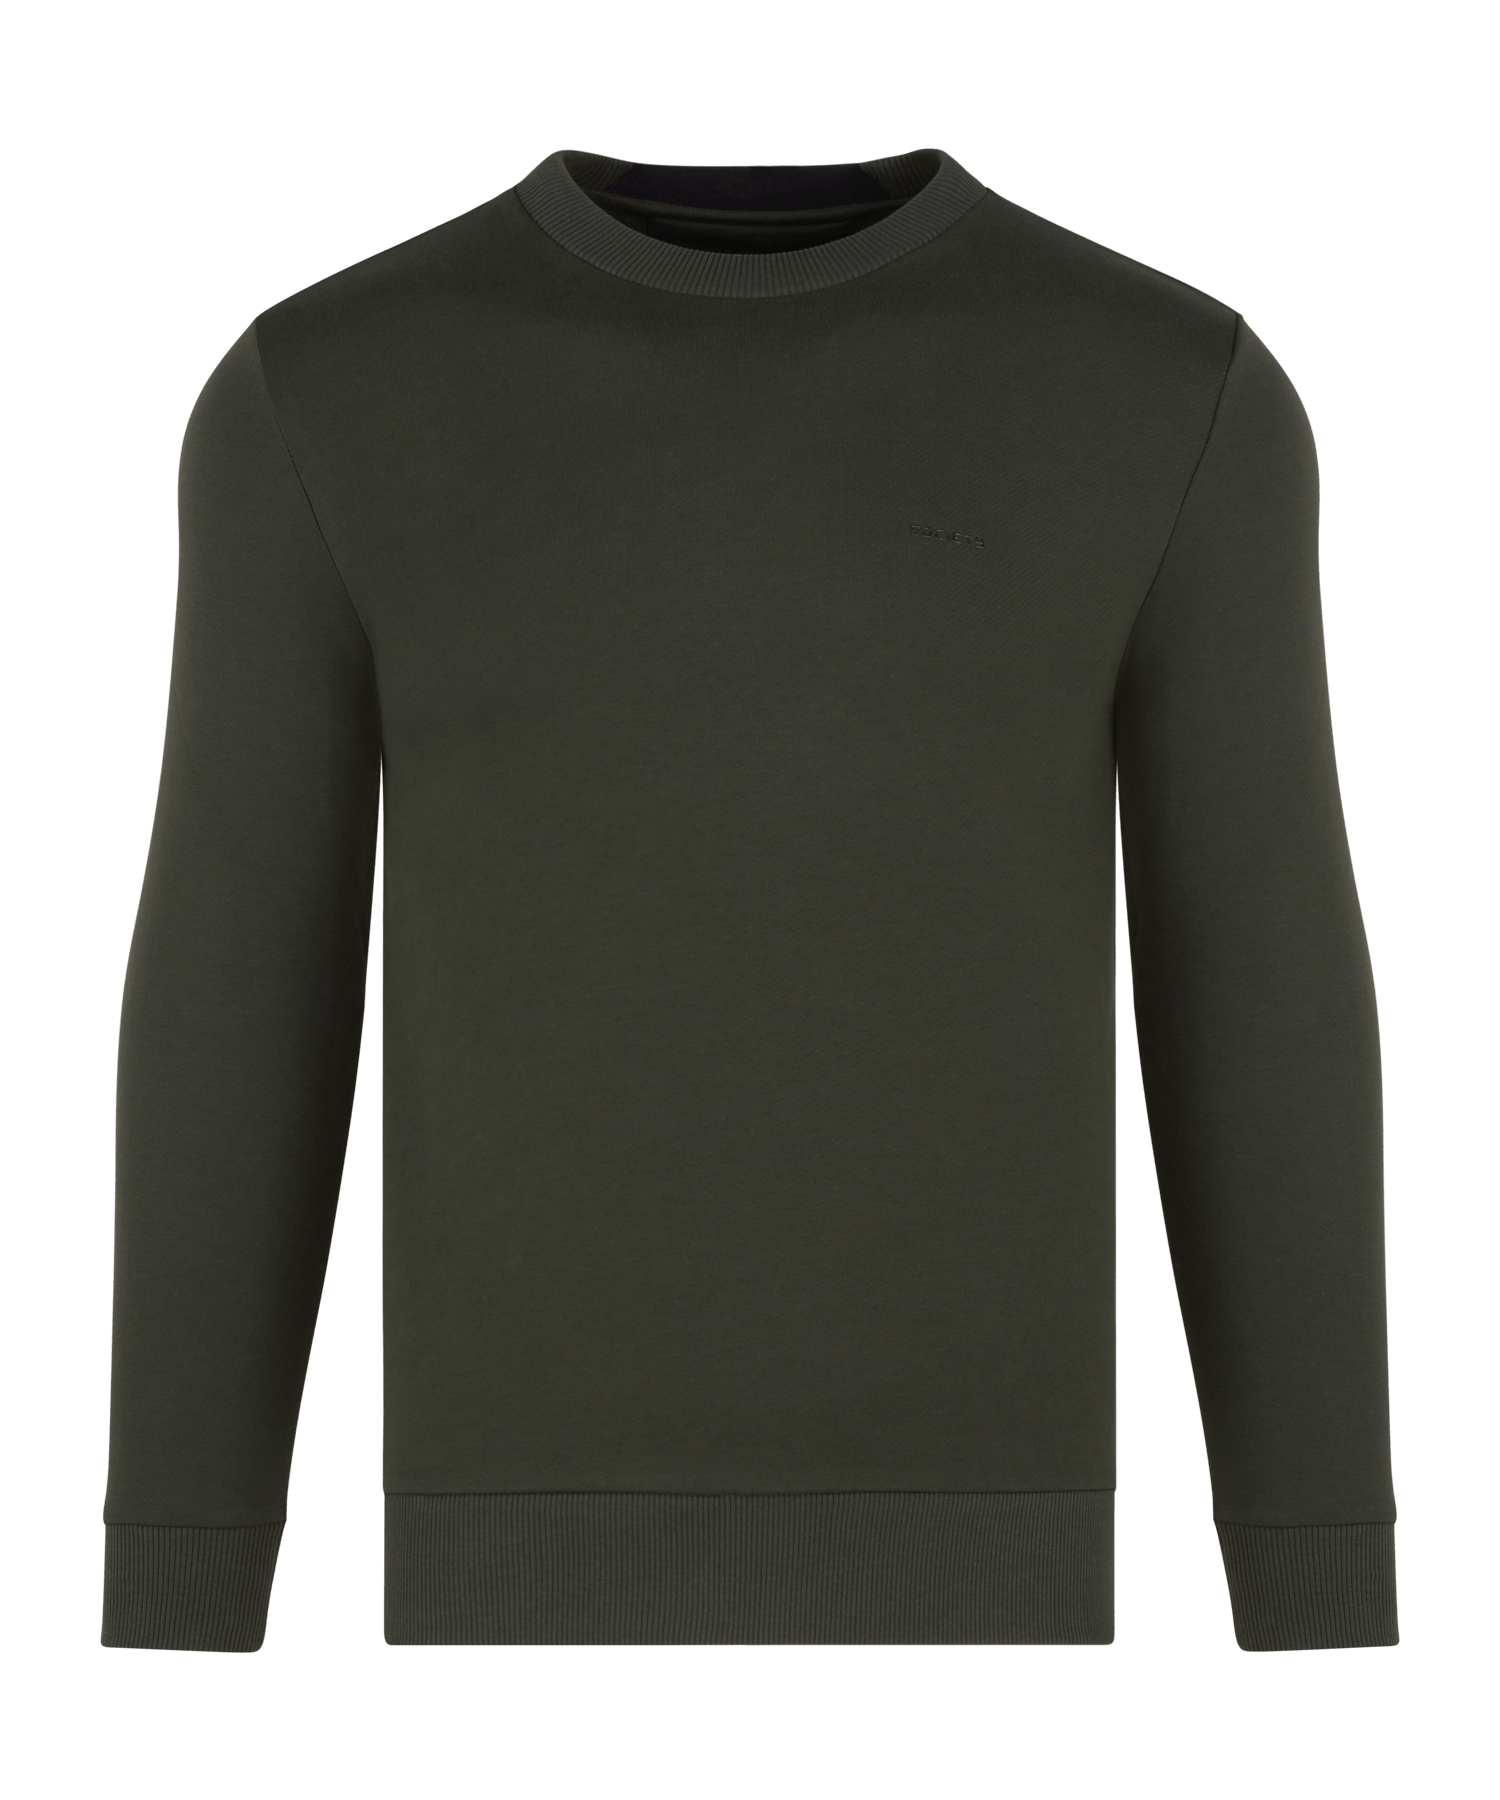 SOCI3TY sweater groen katoen